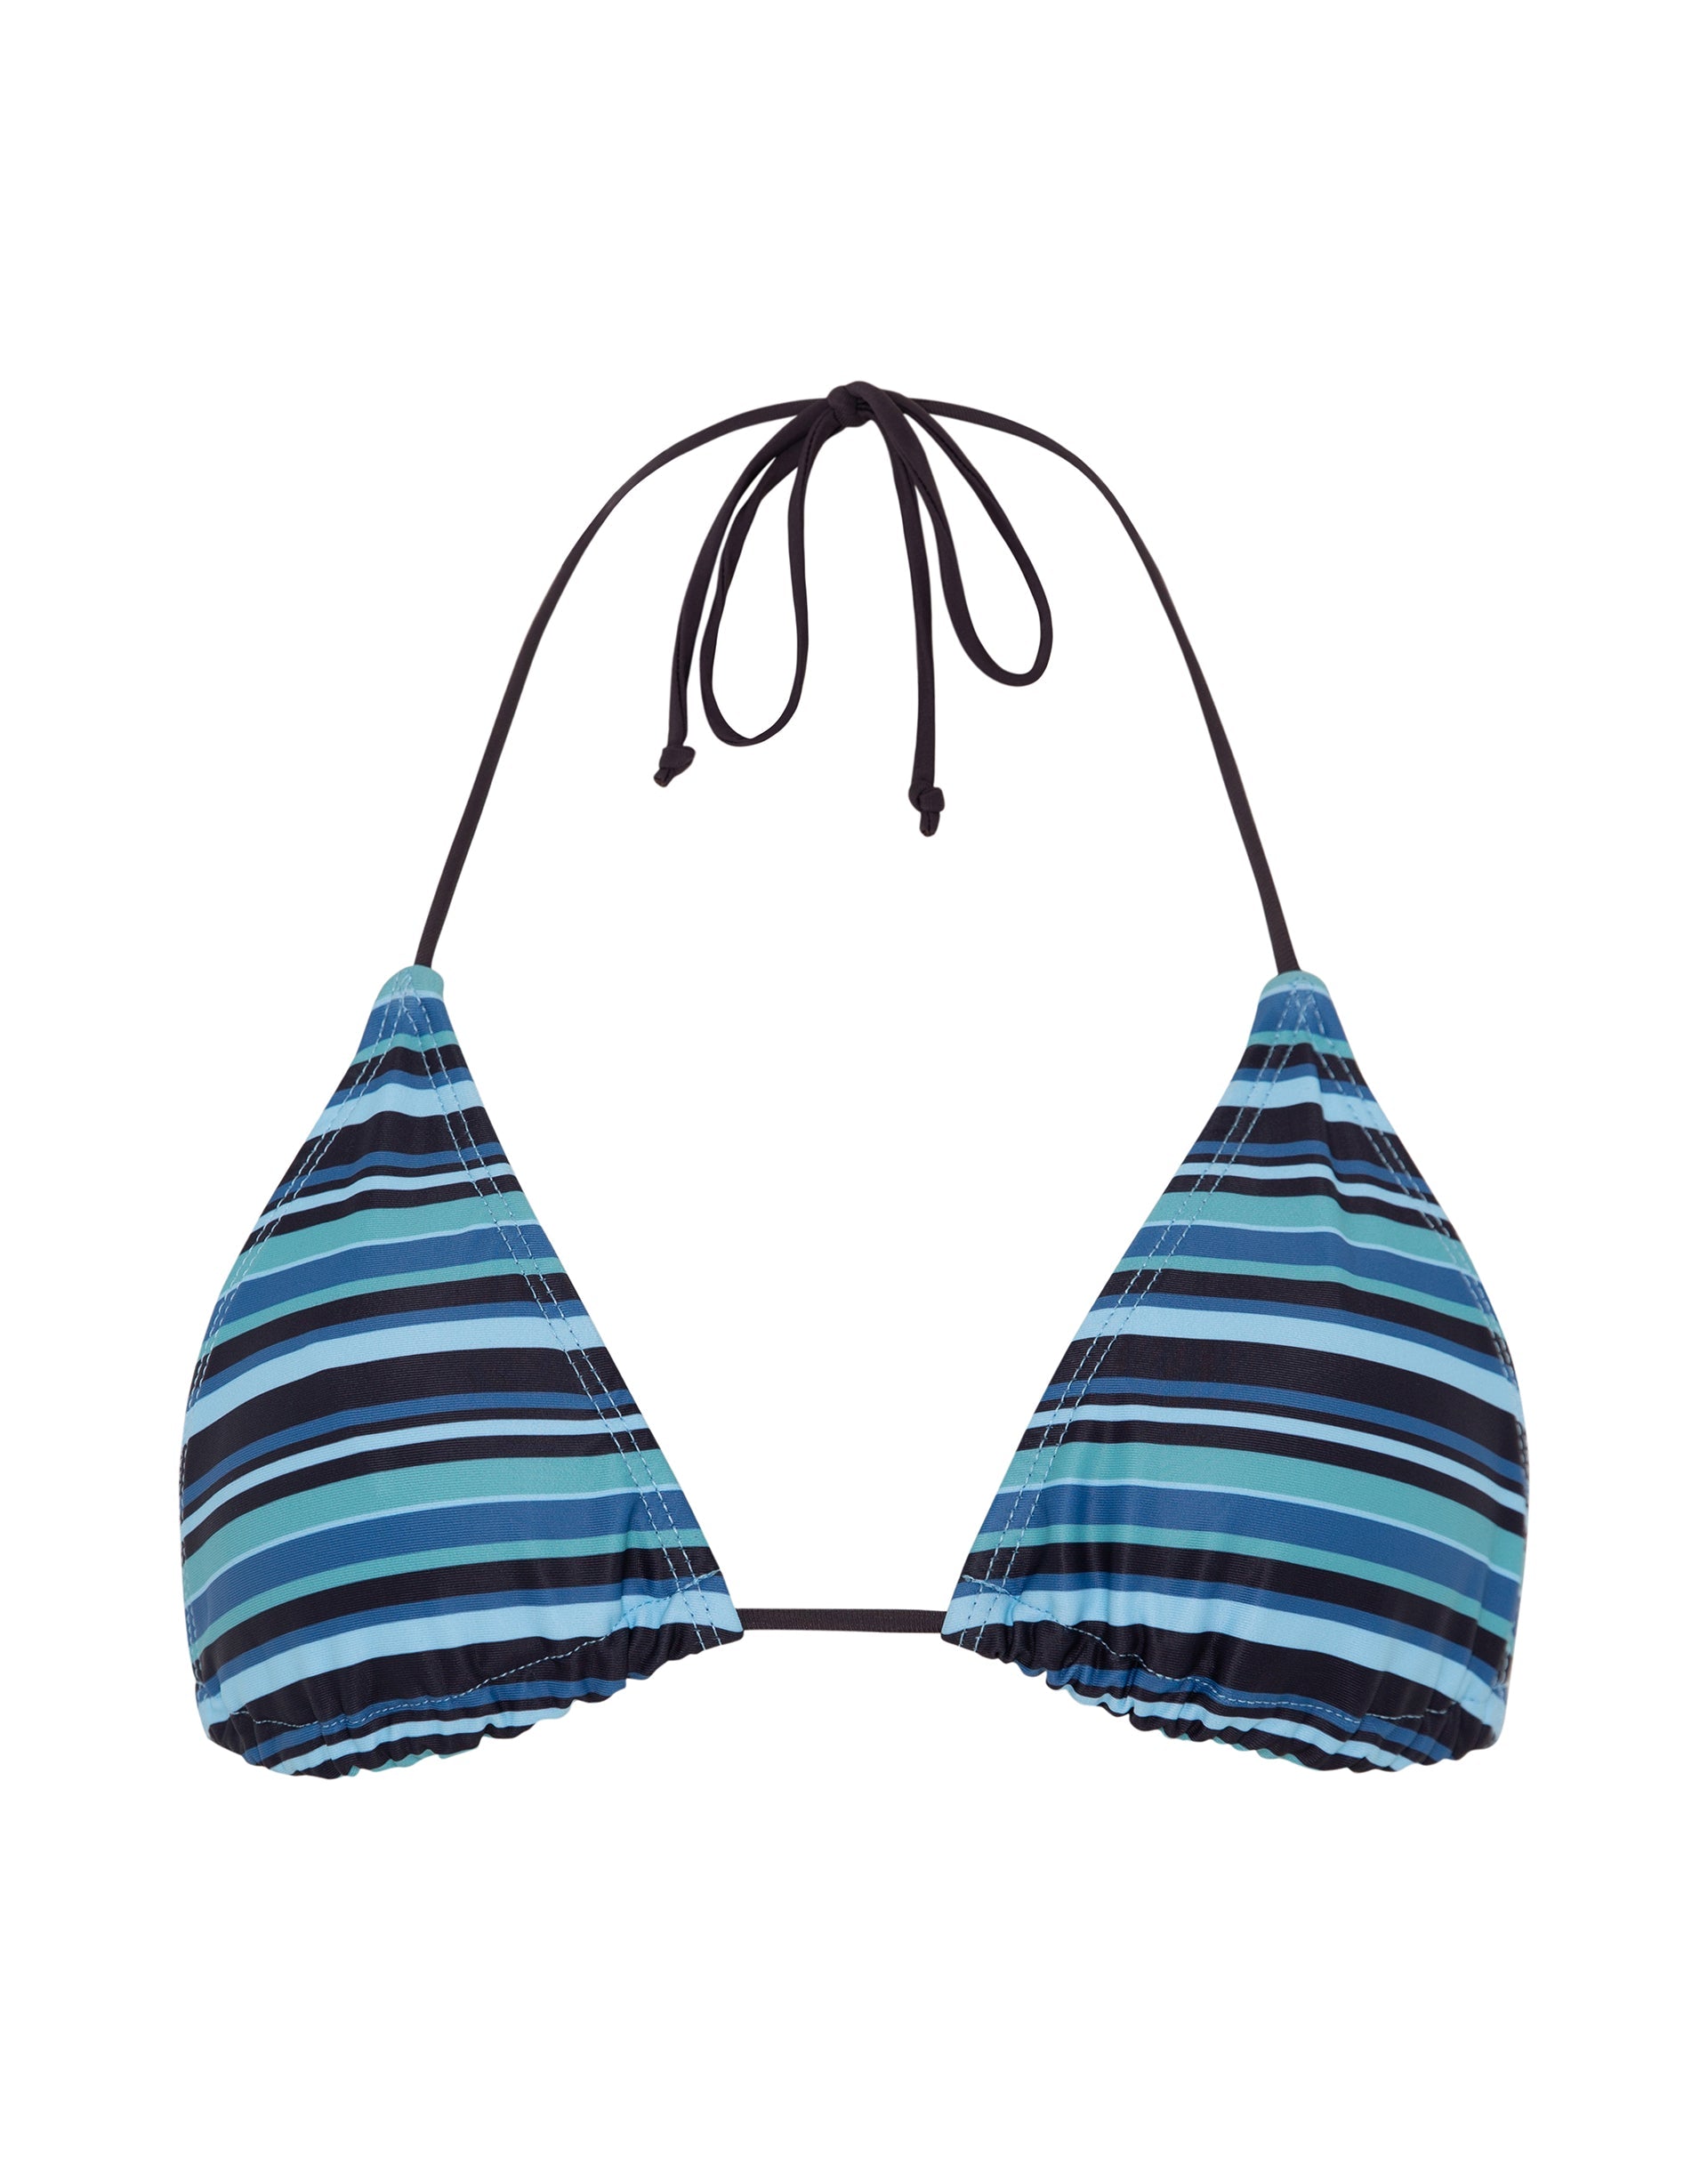 Image of Pami Bikini Top in Stripe Blue with Brown Tie